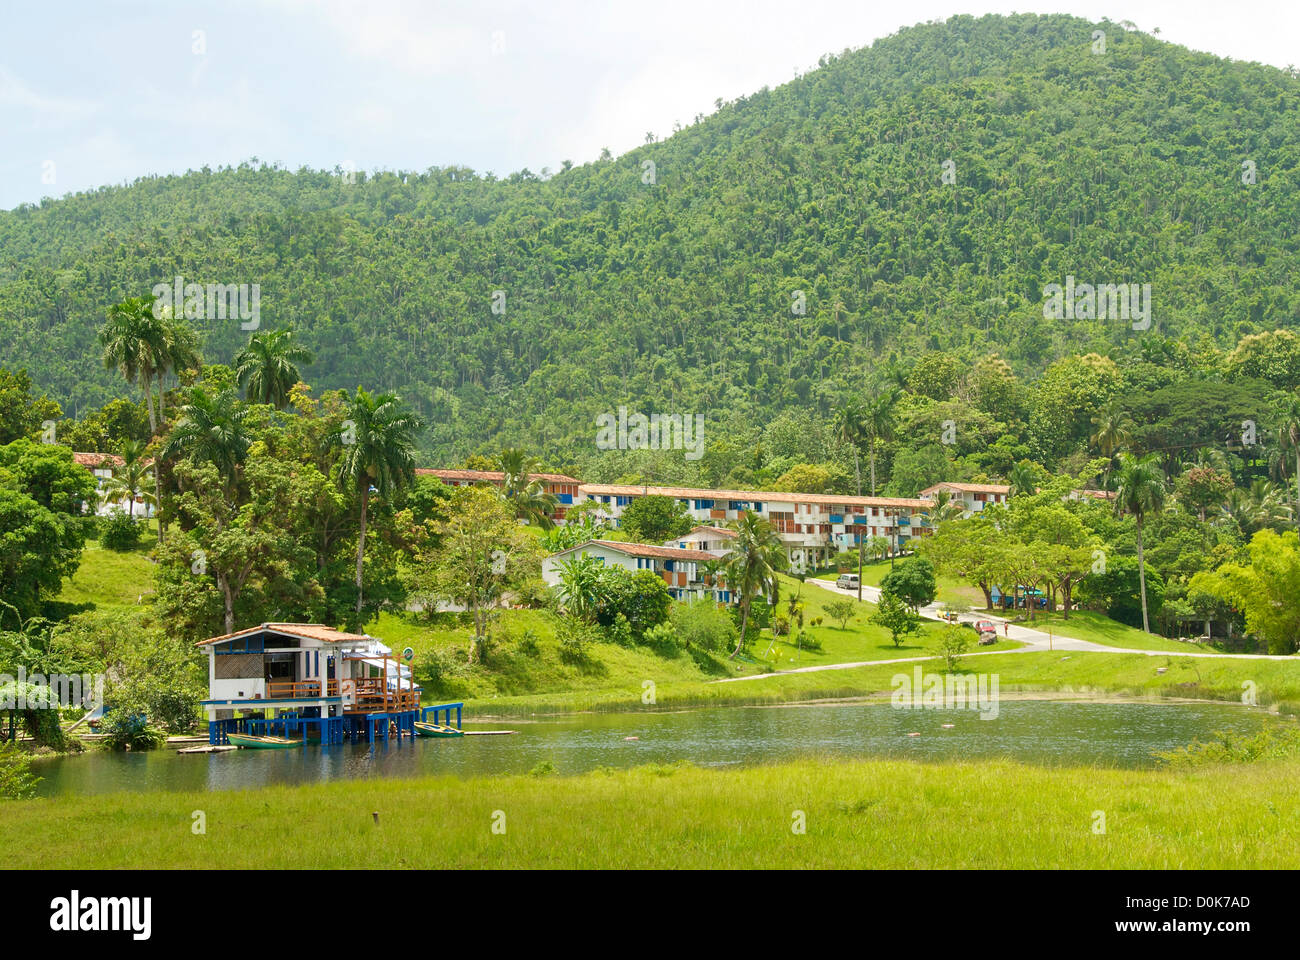 Las Terrazas boat house village and hotel Stock Photo